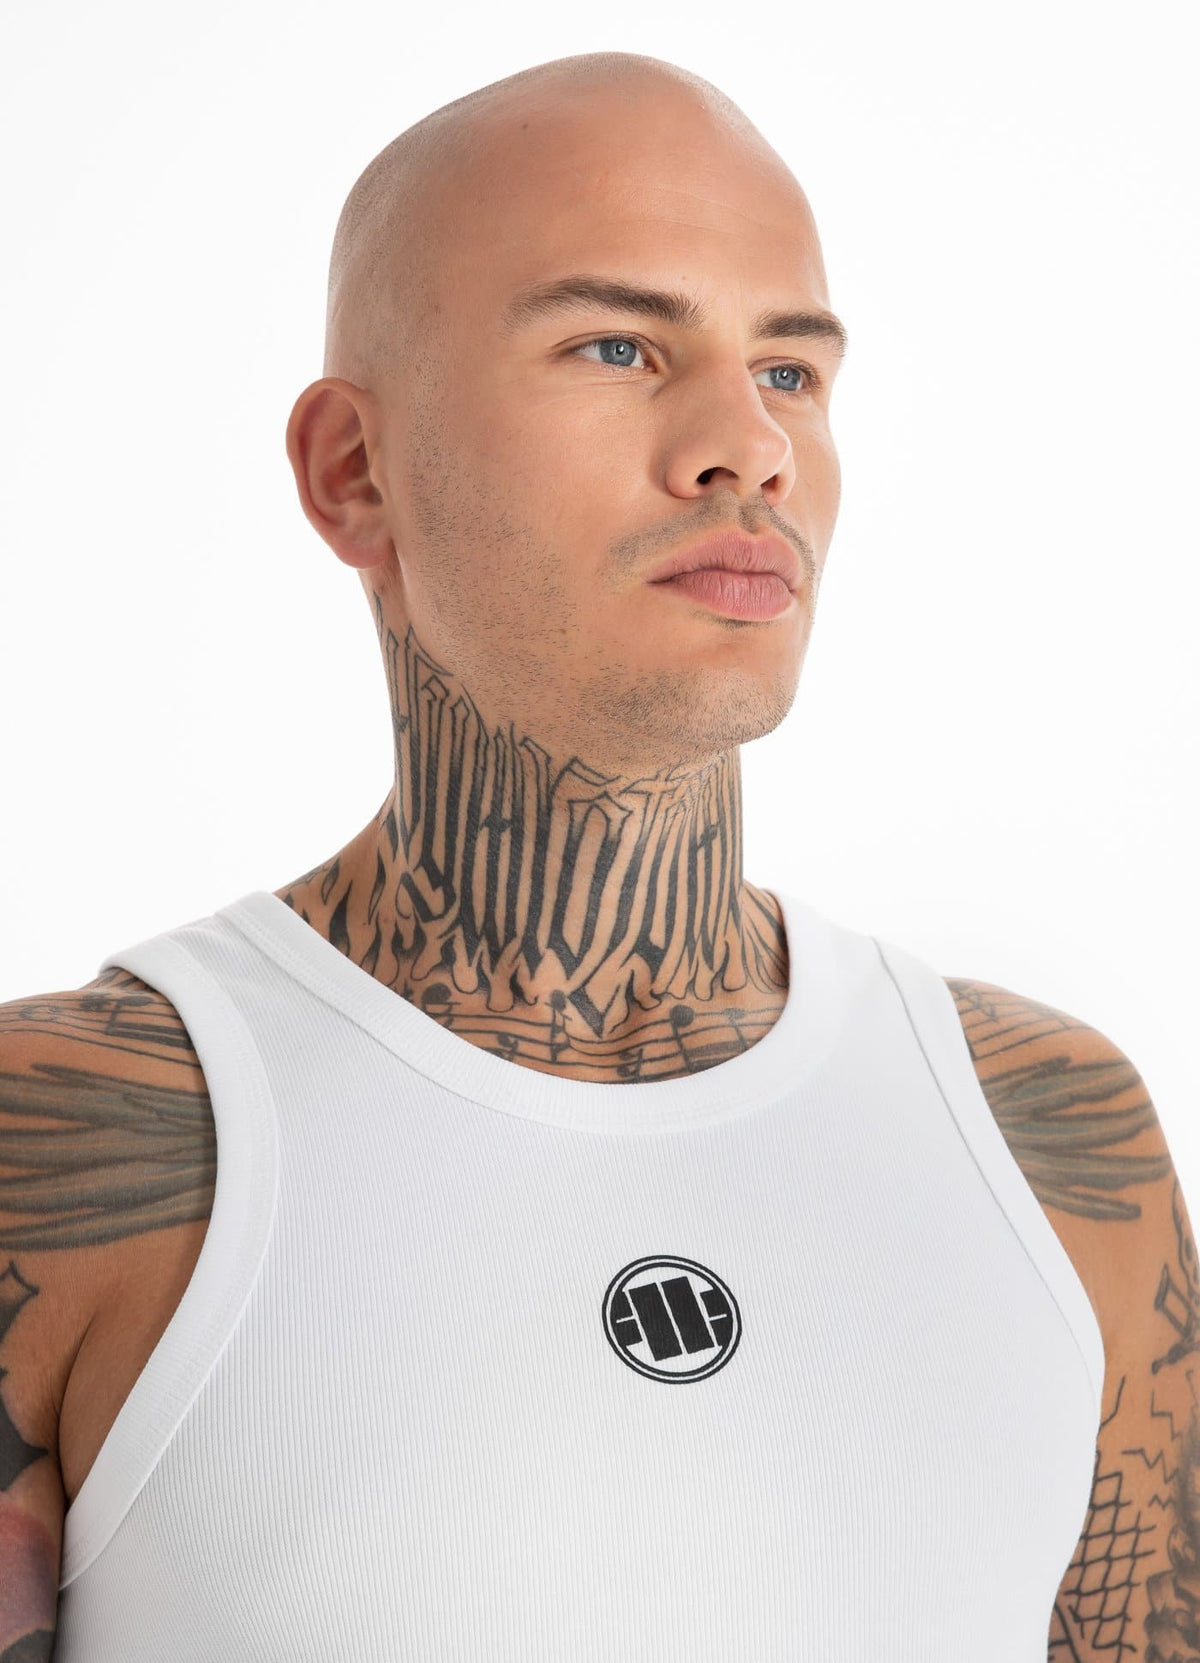 Rib Tank Top Small Logo White - Pitbull West Coast International Store 